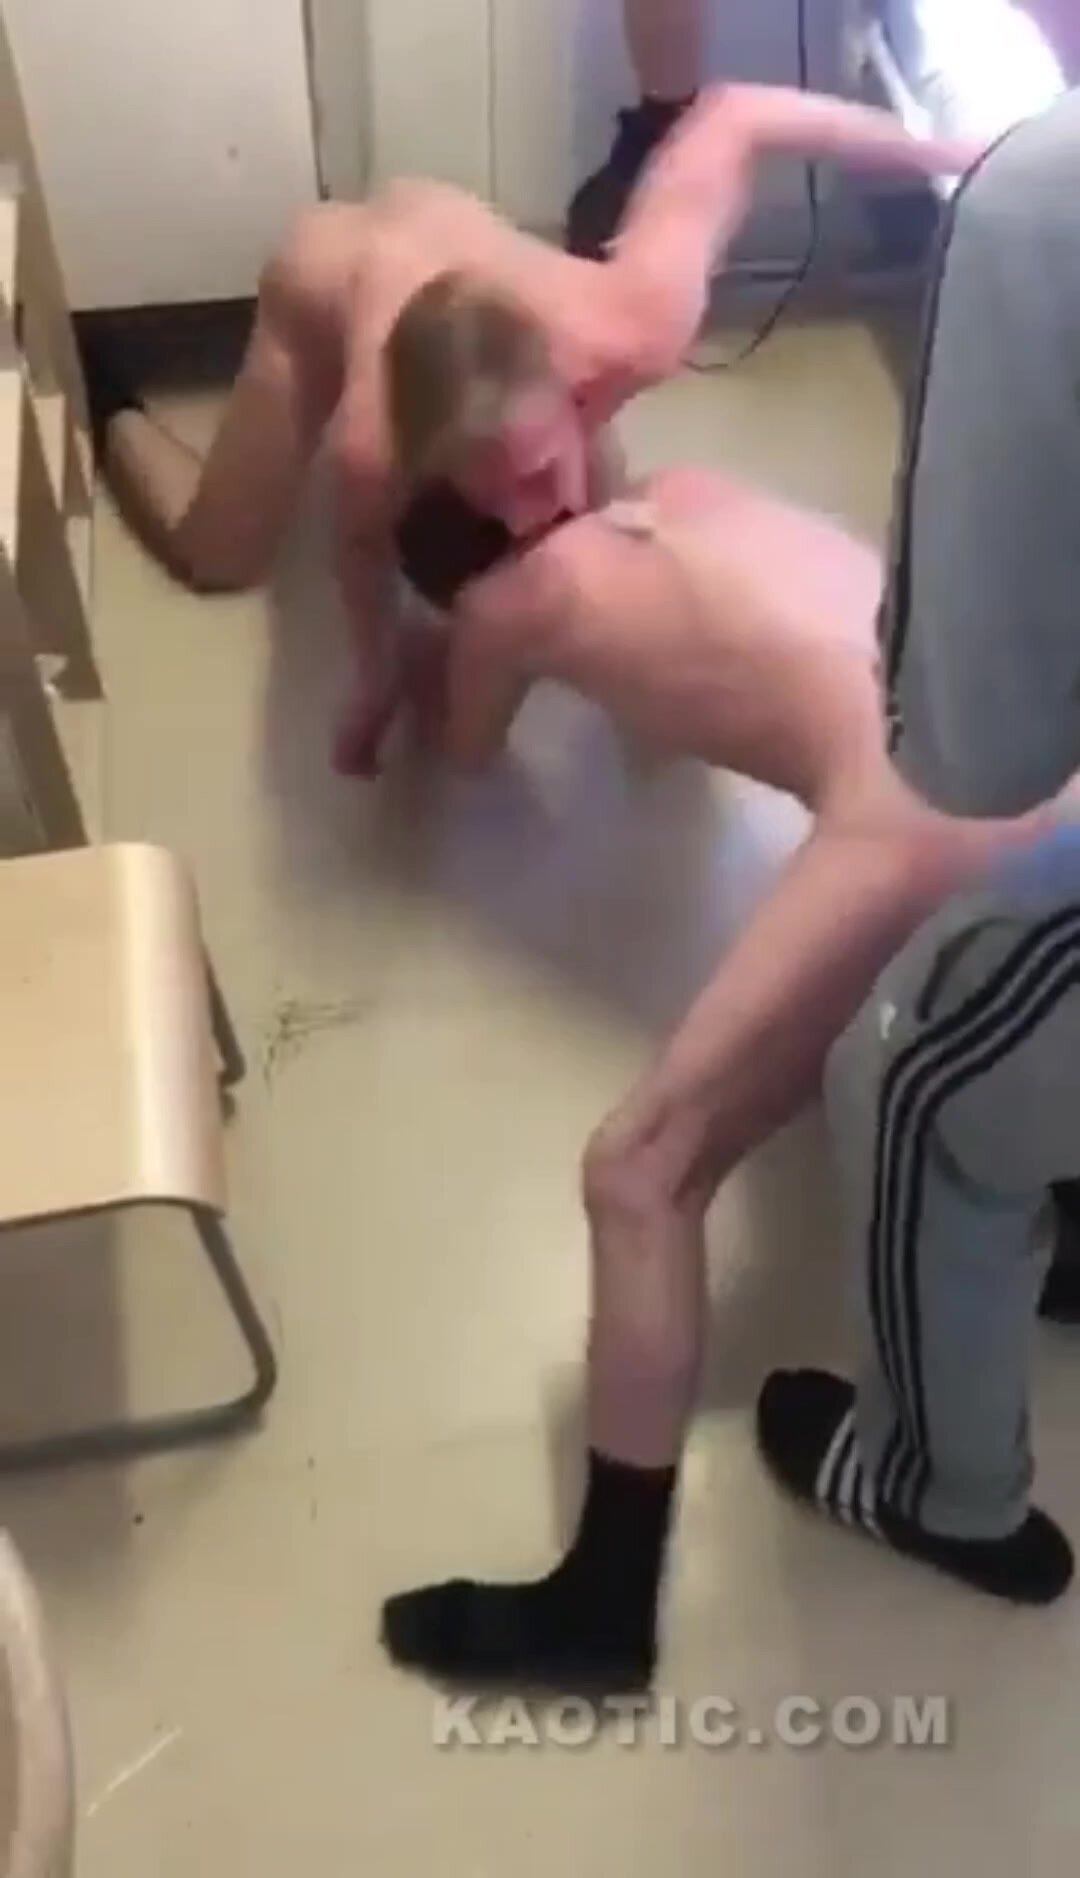 Force "dog fight" prison naked